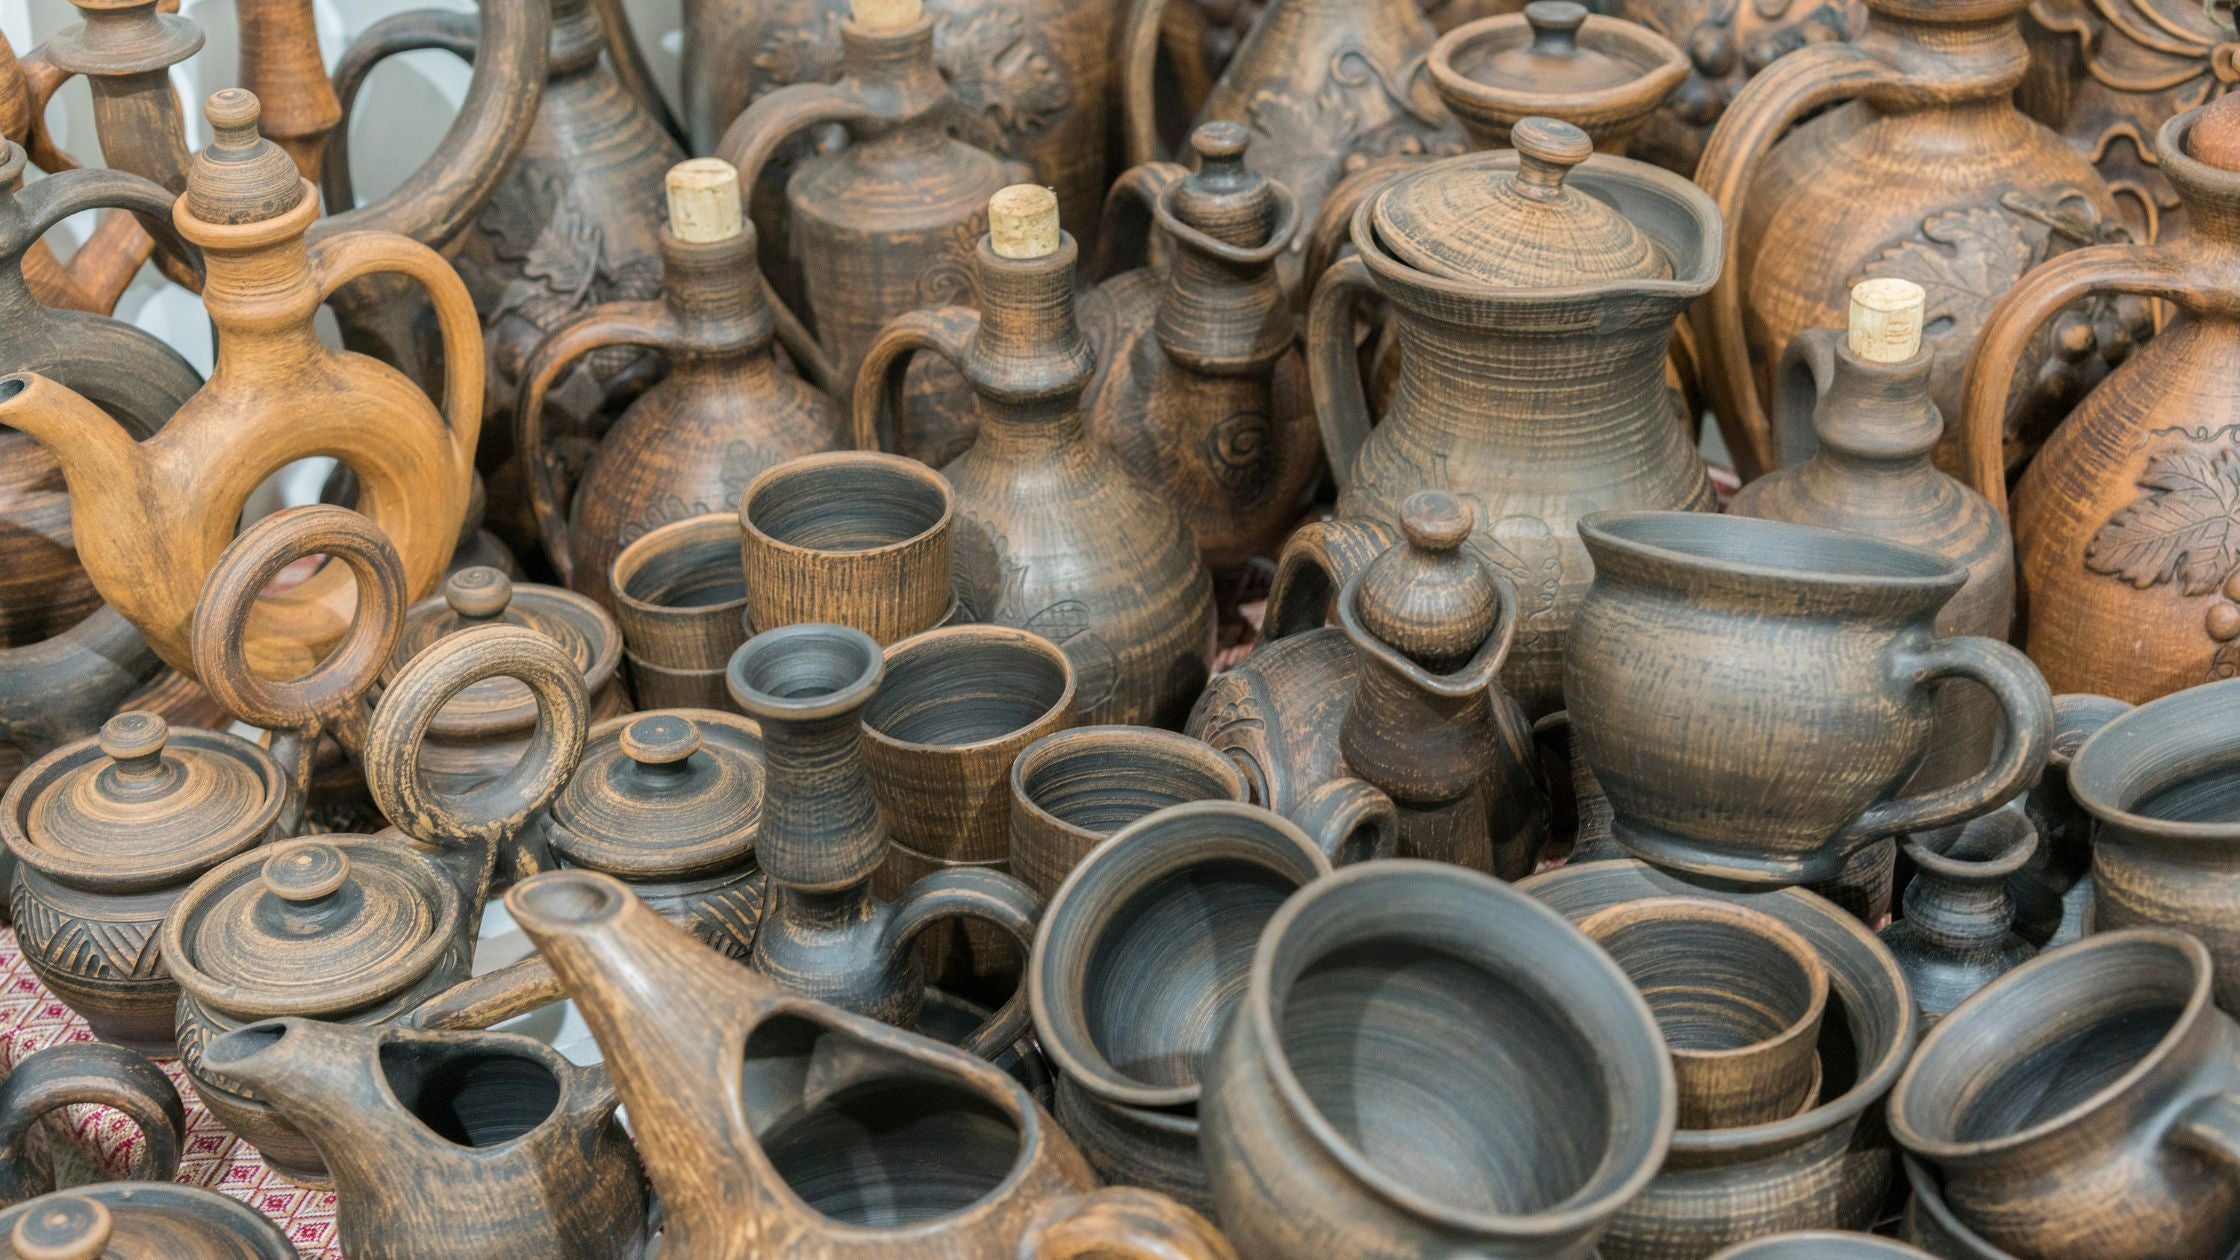 Opishnya ceramics and black pottery from Ukraine